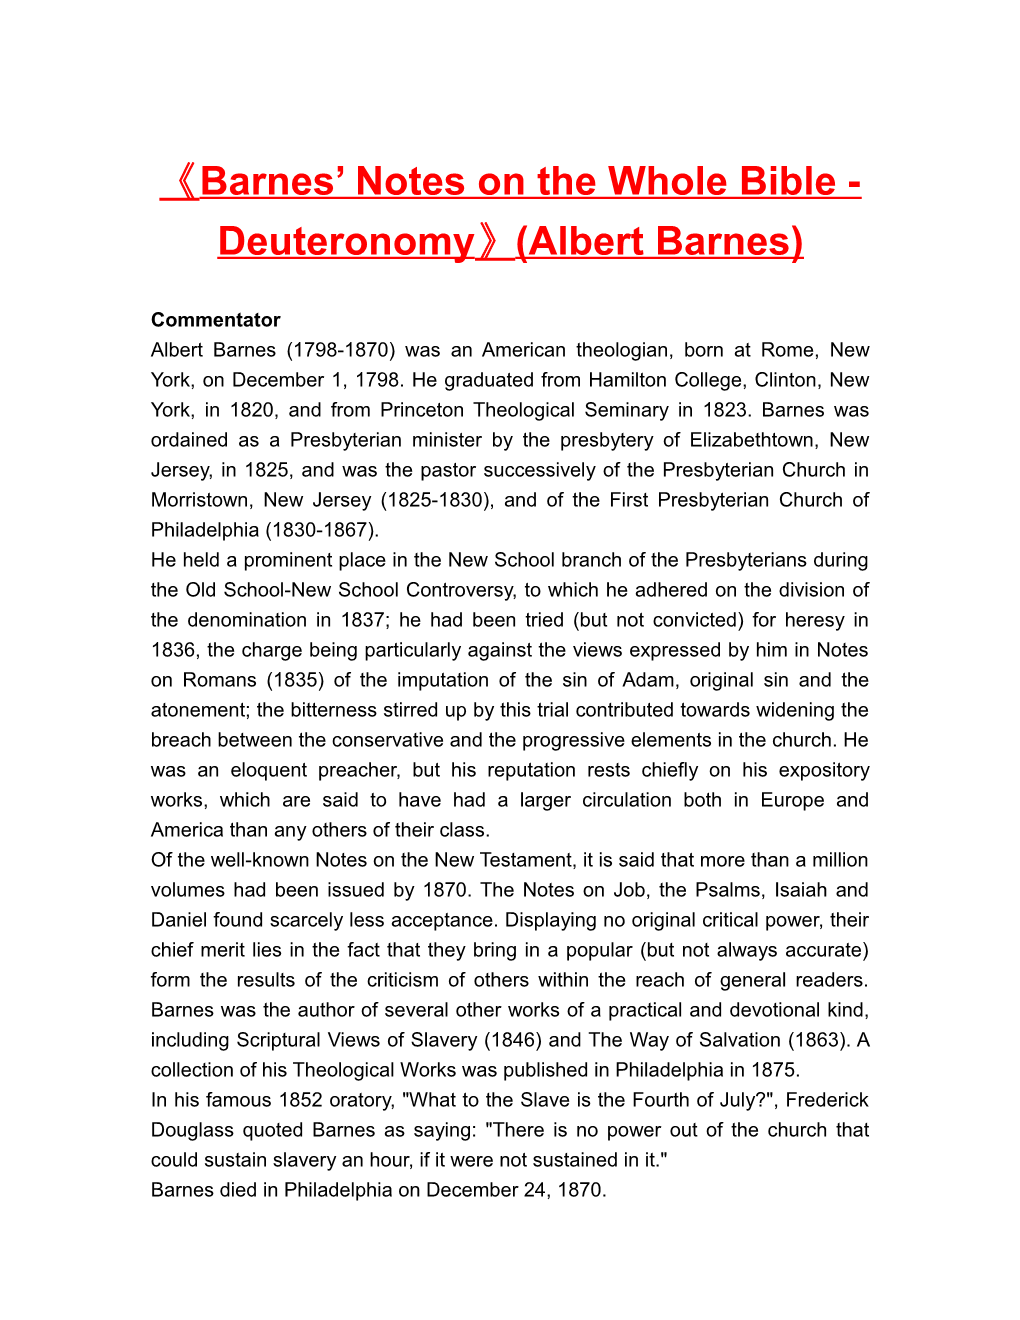 Barnes Notes on the Whole Bible - Deuteronomy (Albert Barnes)